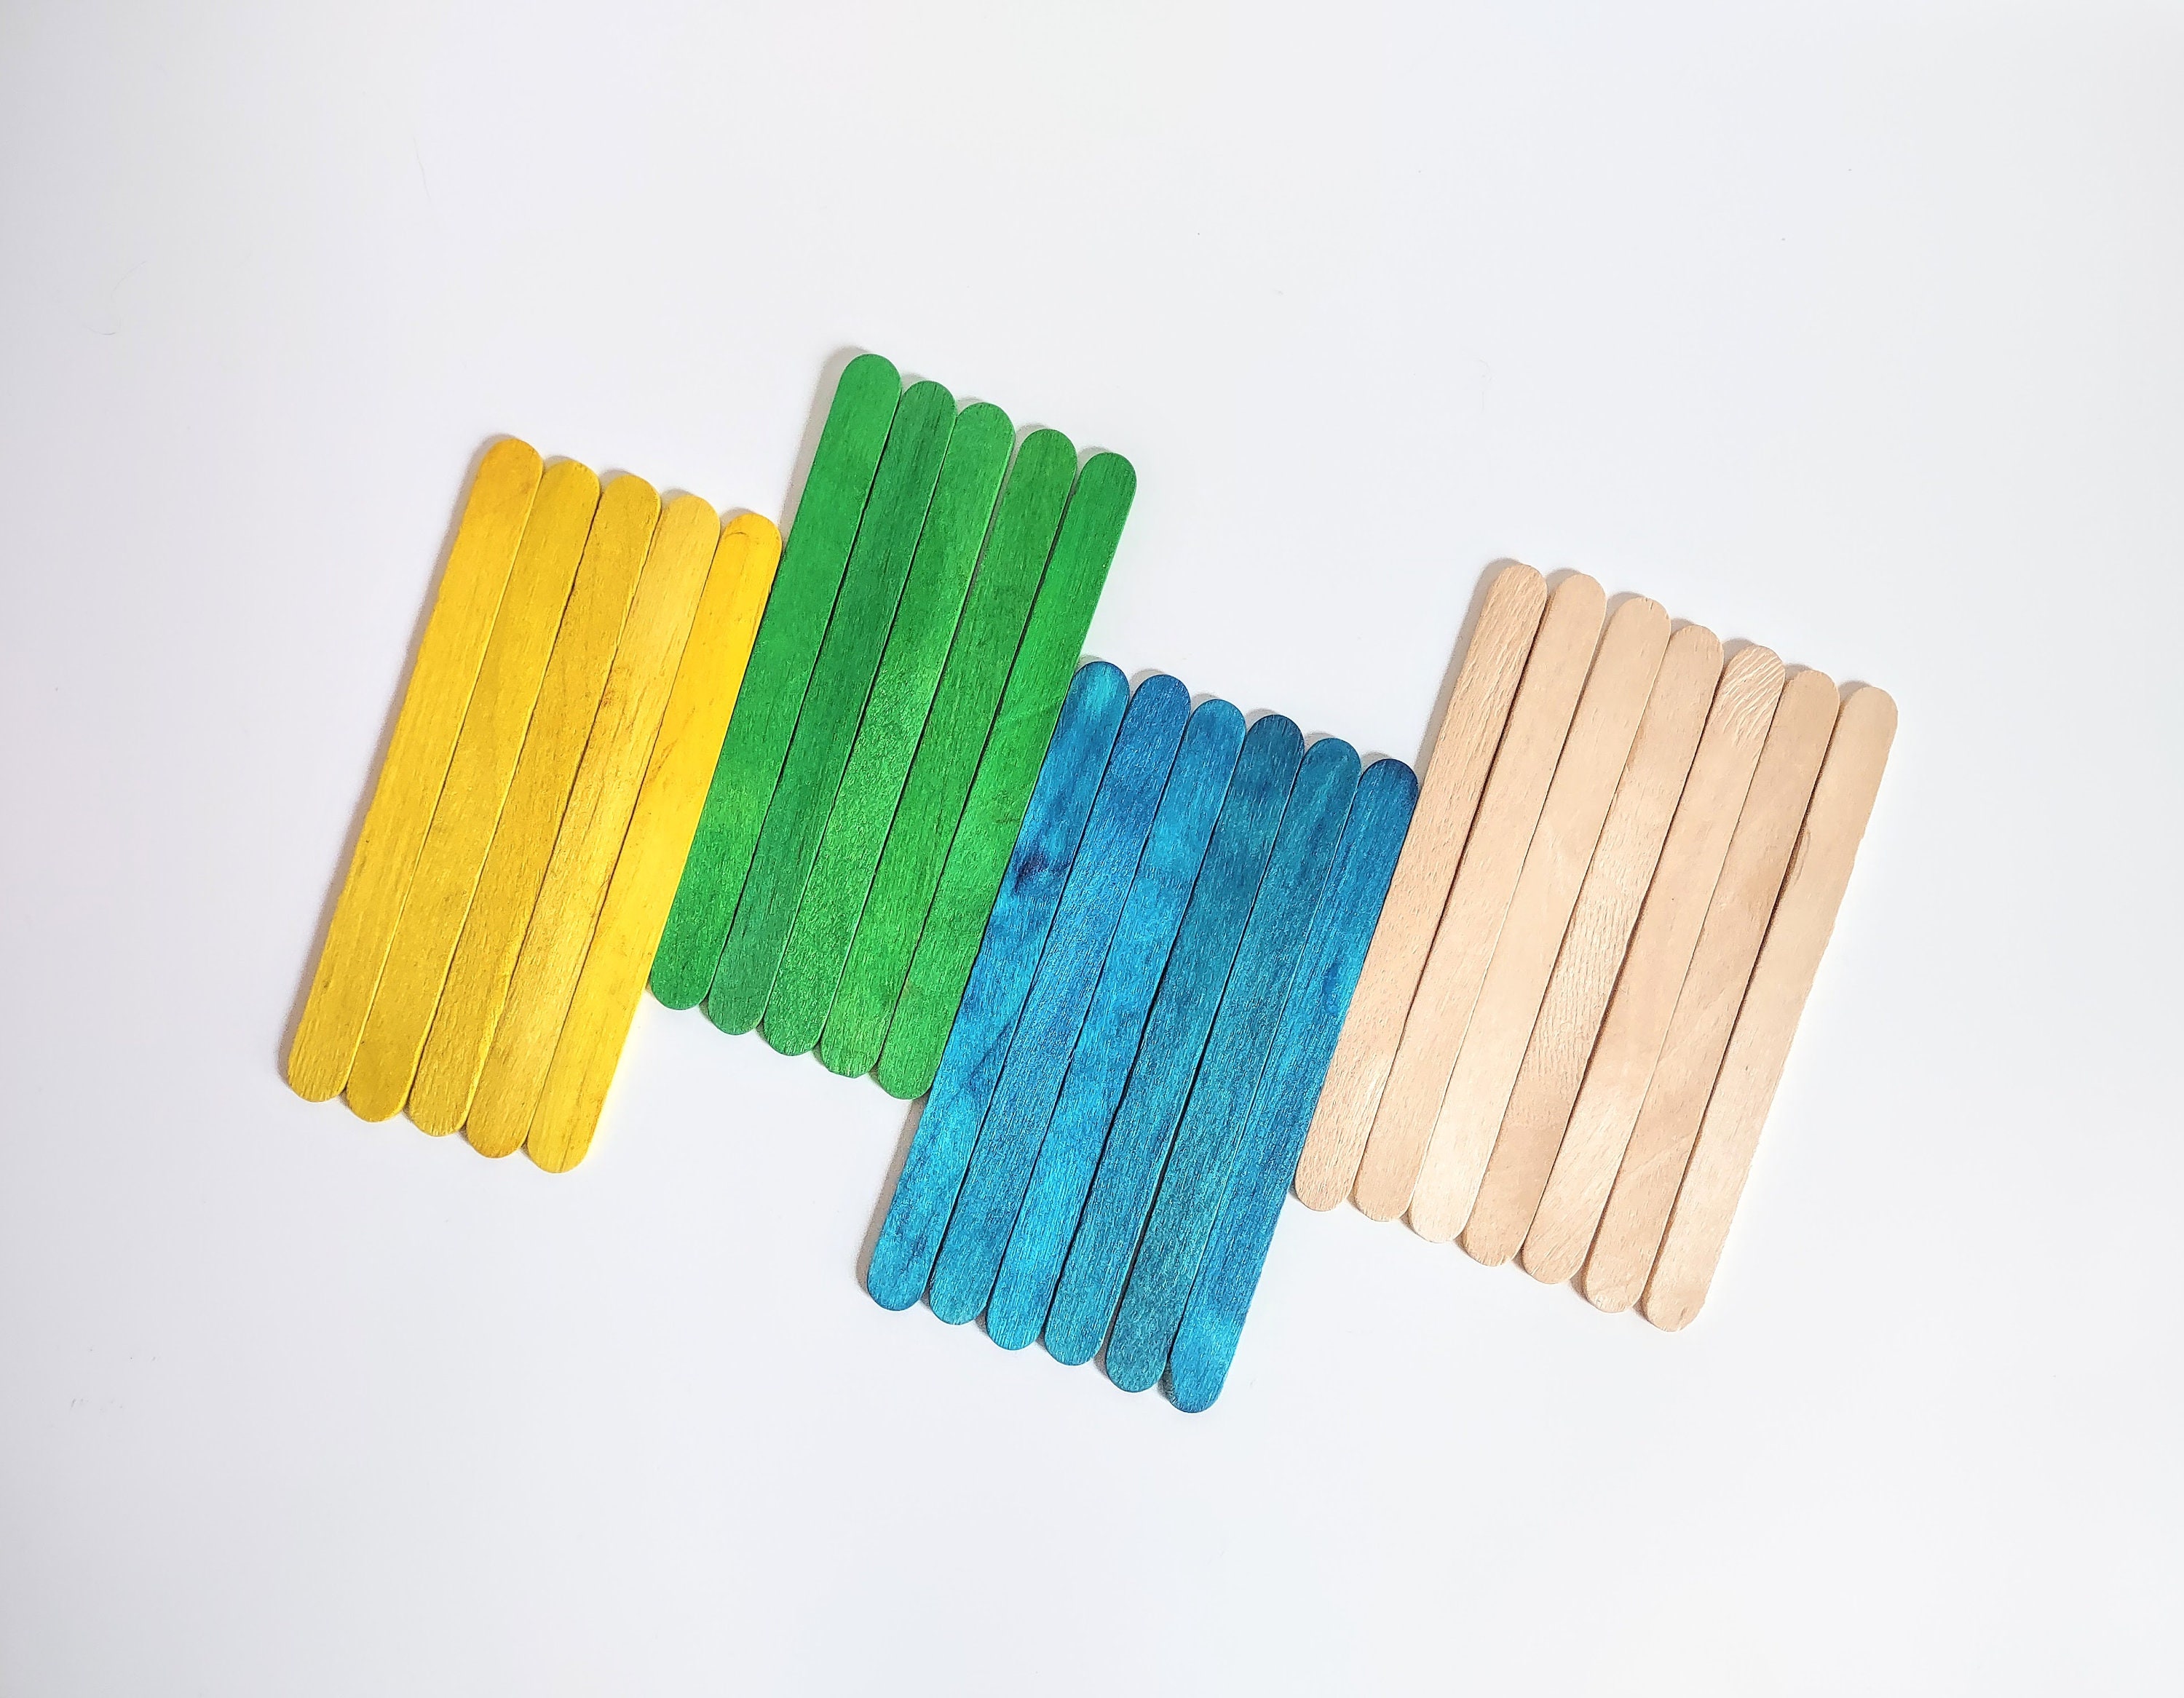 250 Pack Unfinished Mini Popsicle Natural Wood Craft Sticks Bulk, 4-1/2 x  2/5